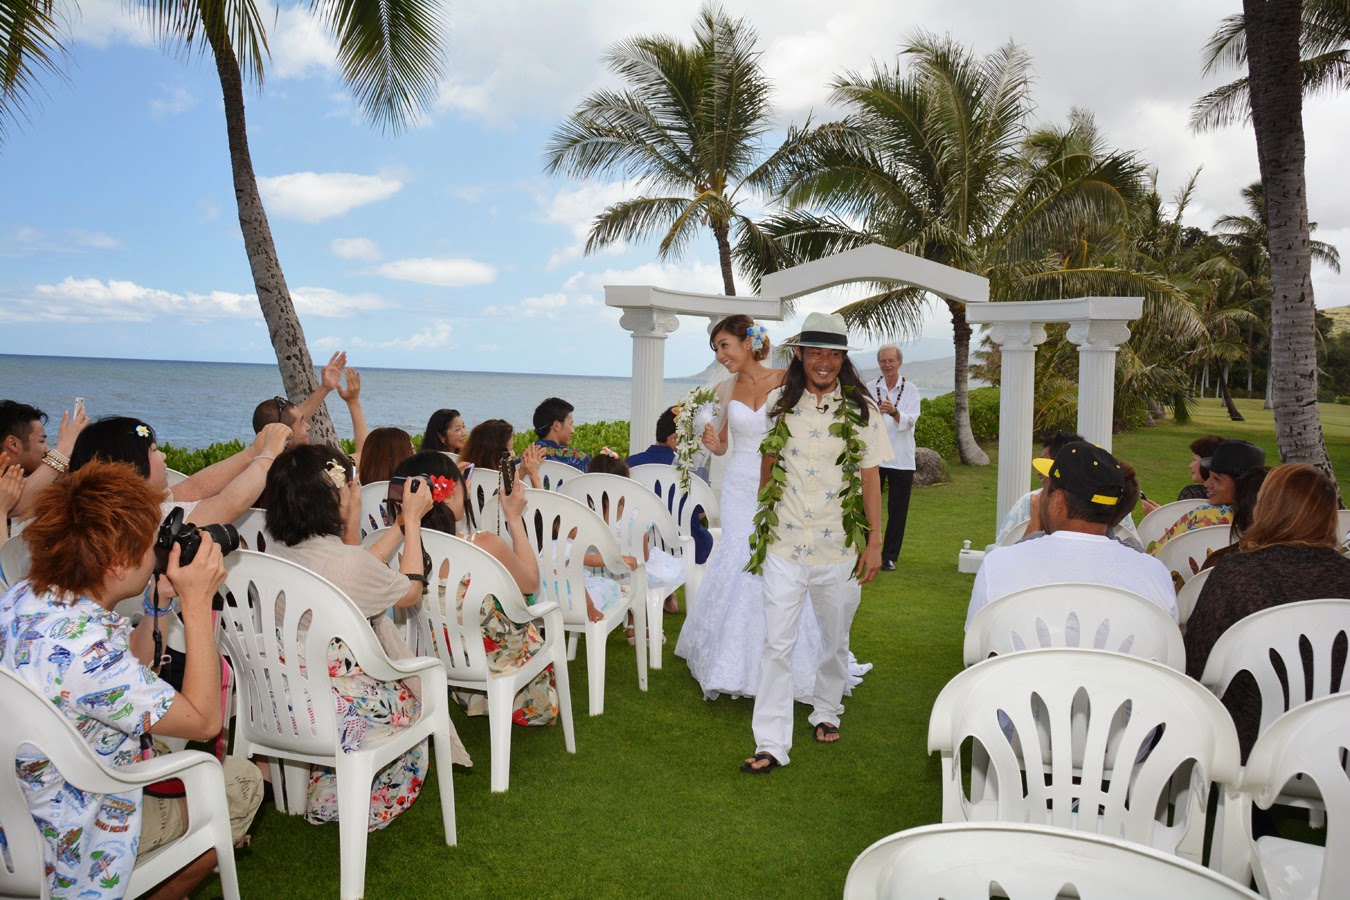 Paradise Cove Wedding